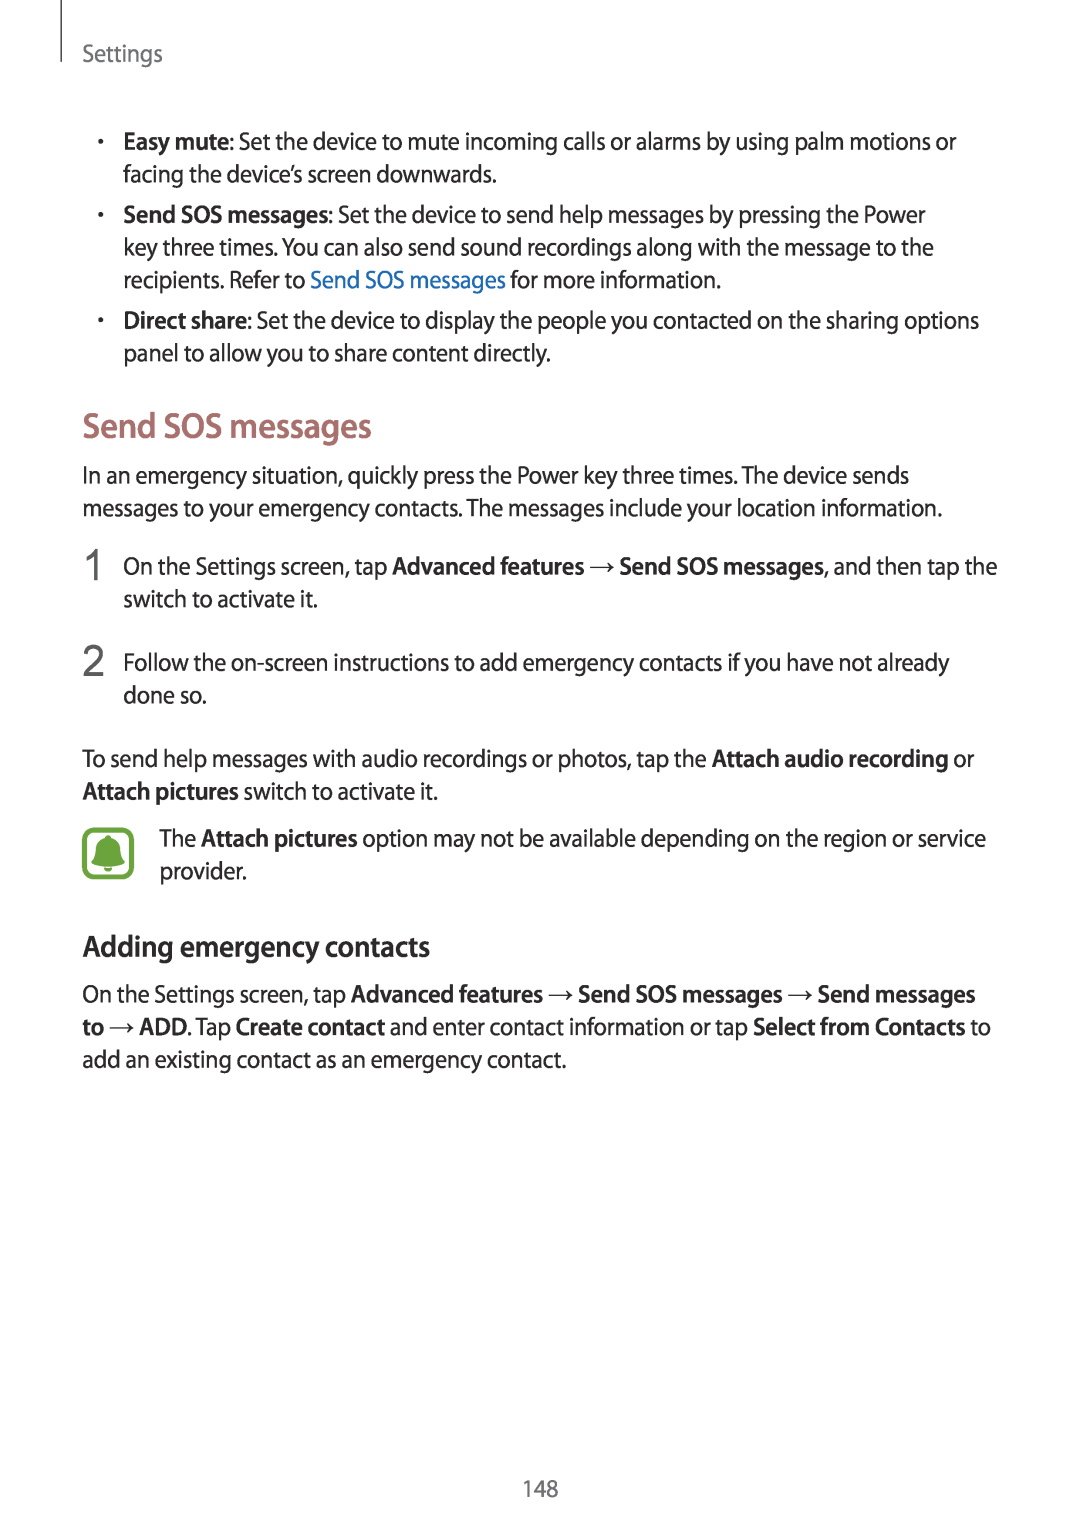 Samsung SM-G928FZDAORX, SM-G925FZKADBT, SM-G925FZWEDBT manual Send SOS messages, Adding emergency contacts, Settings 